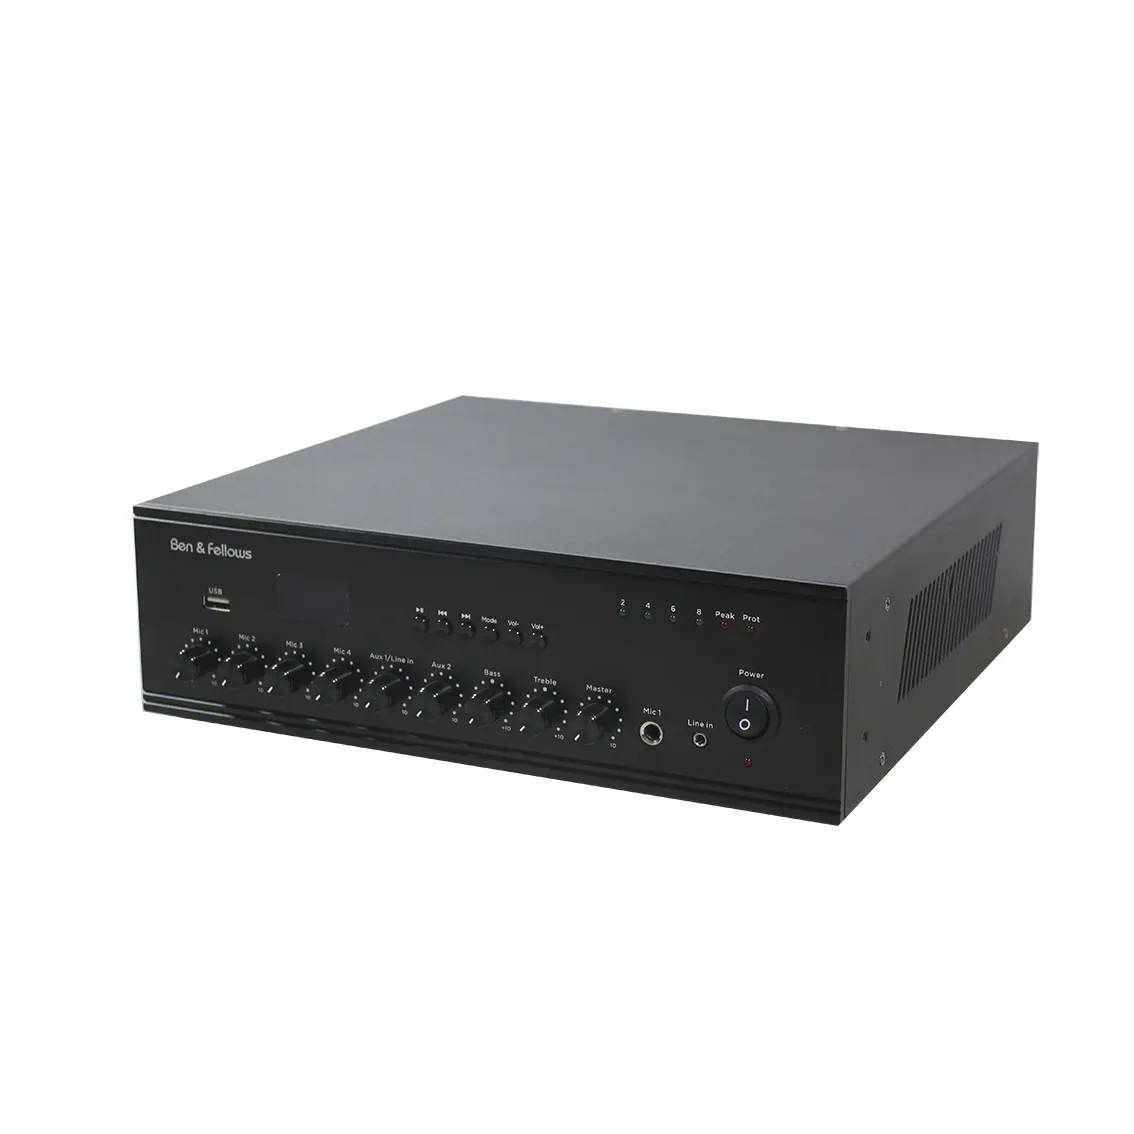 120W Digital Audio Public Address Digital Mixer Power Amplifier with MP3/TUNER DAB